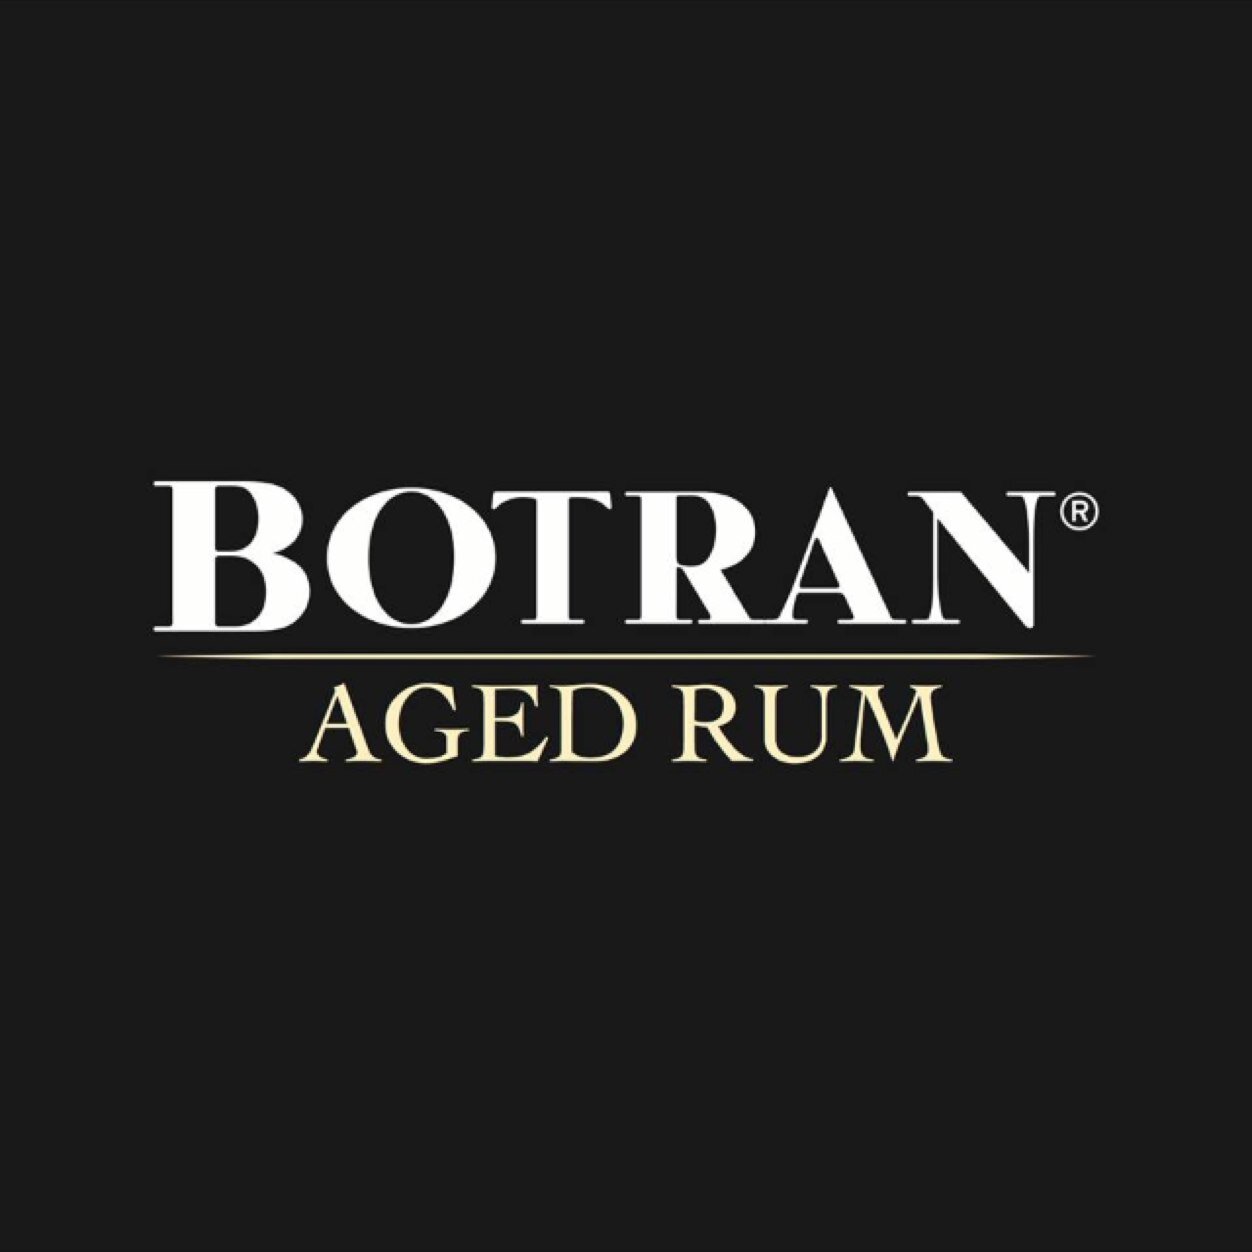 The Night Begins with Botran. #BotranRum